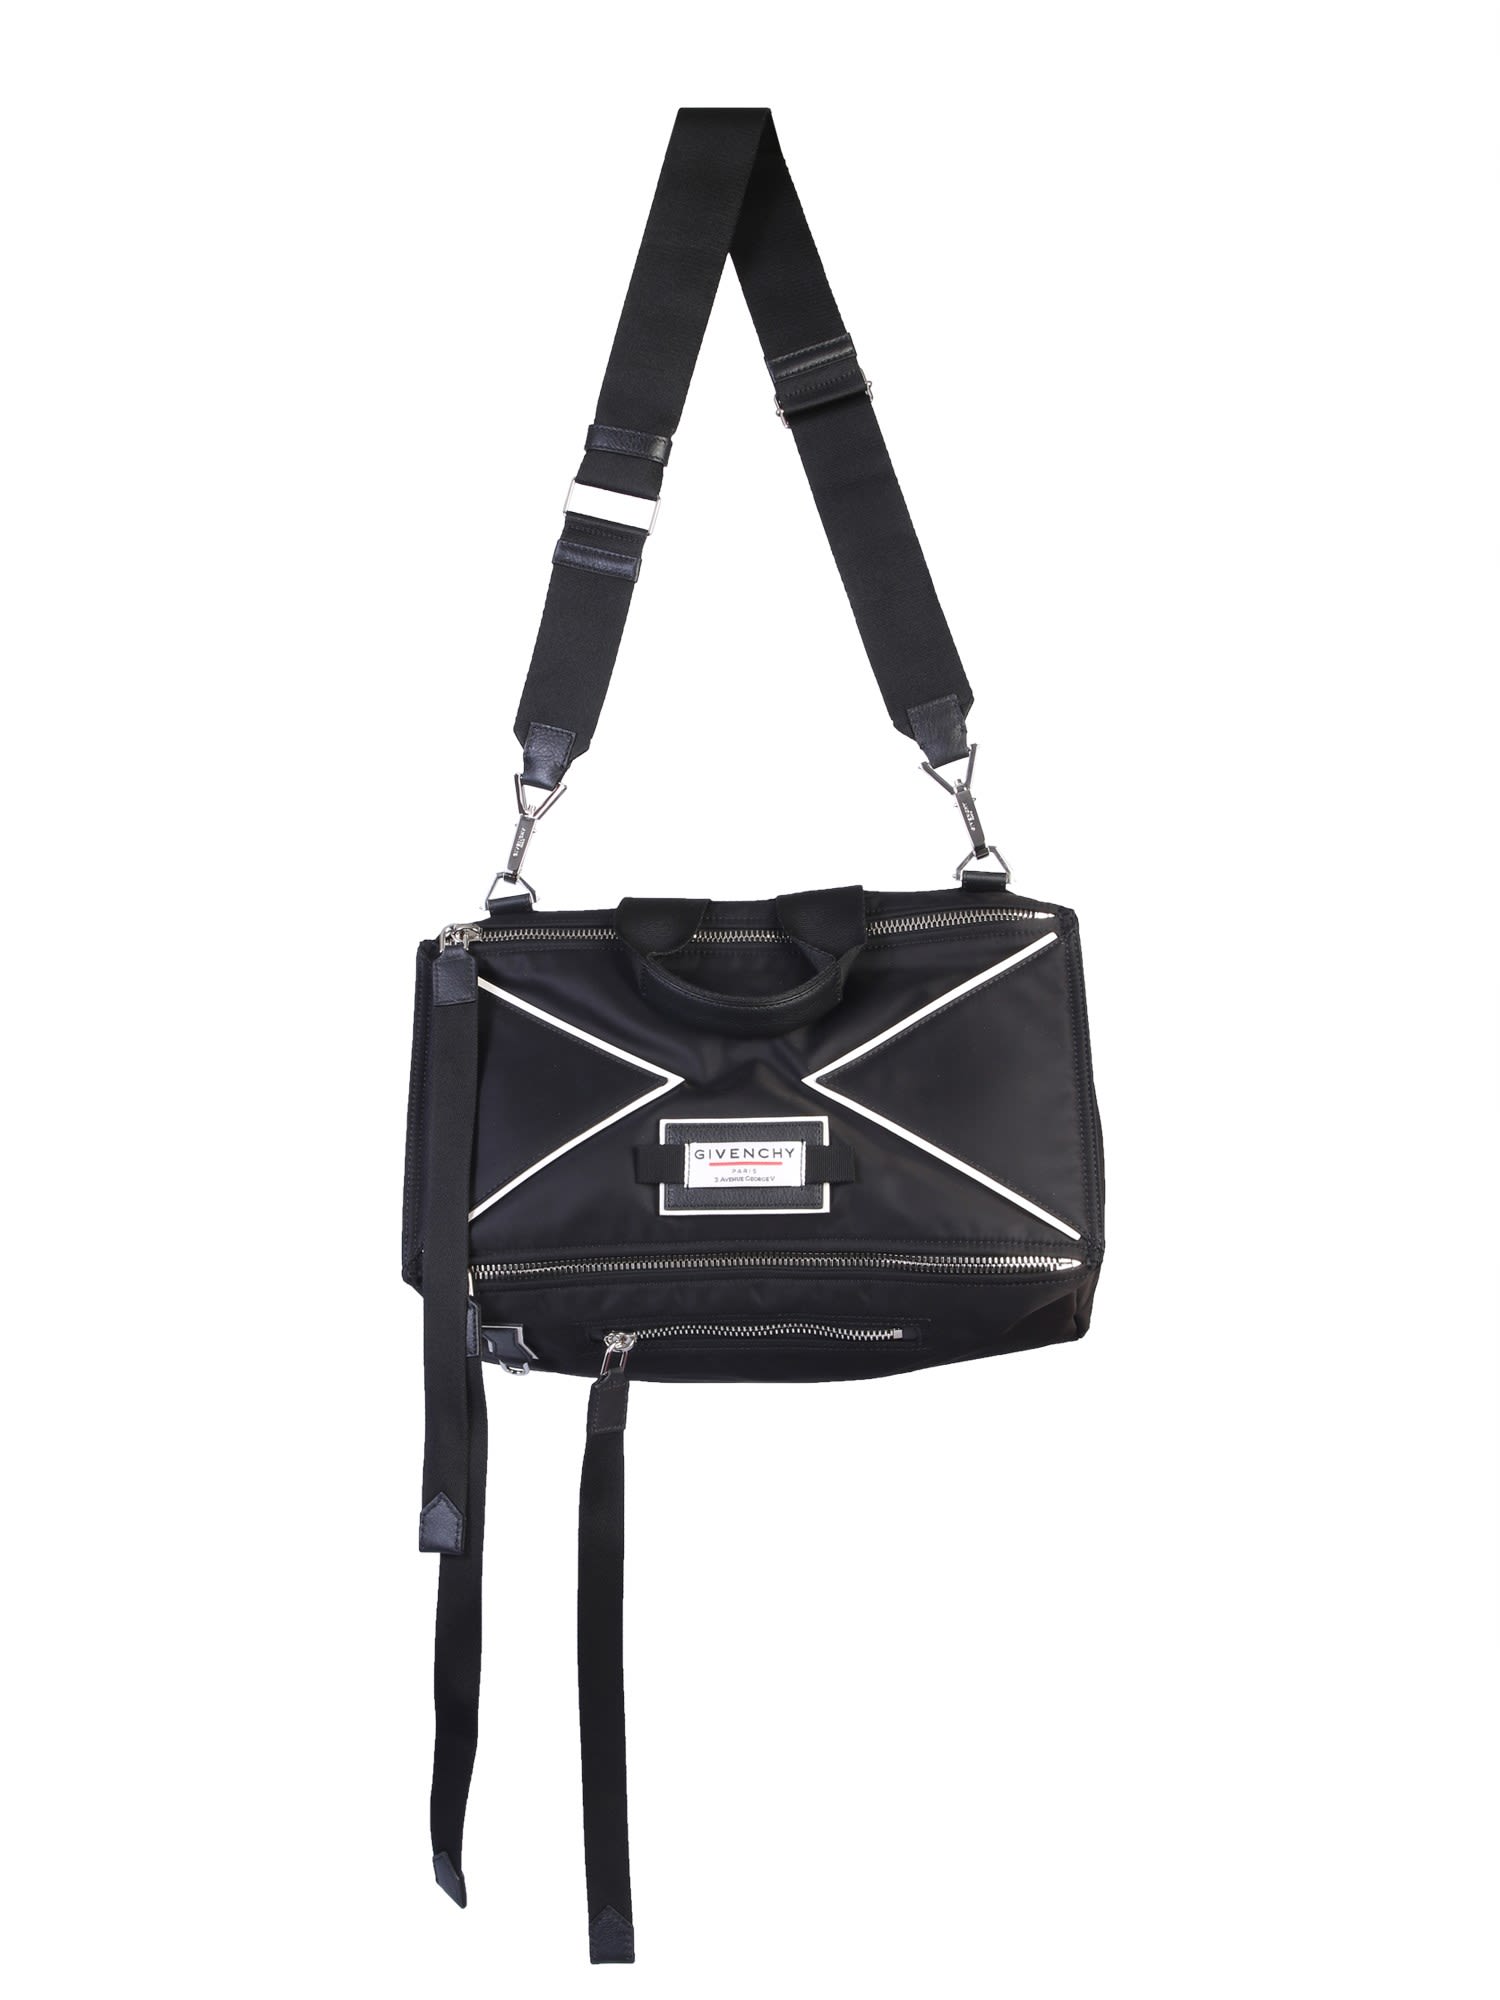 Givenchy Pandora Messanger Bag